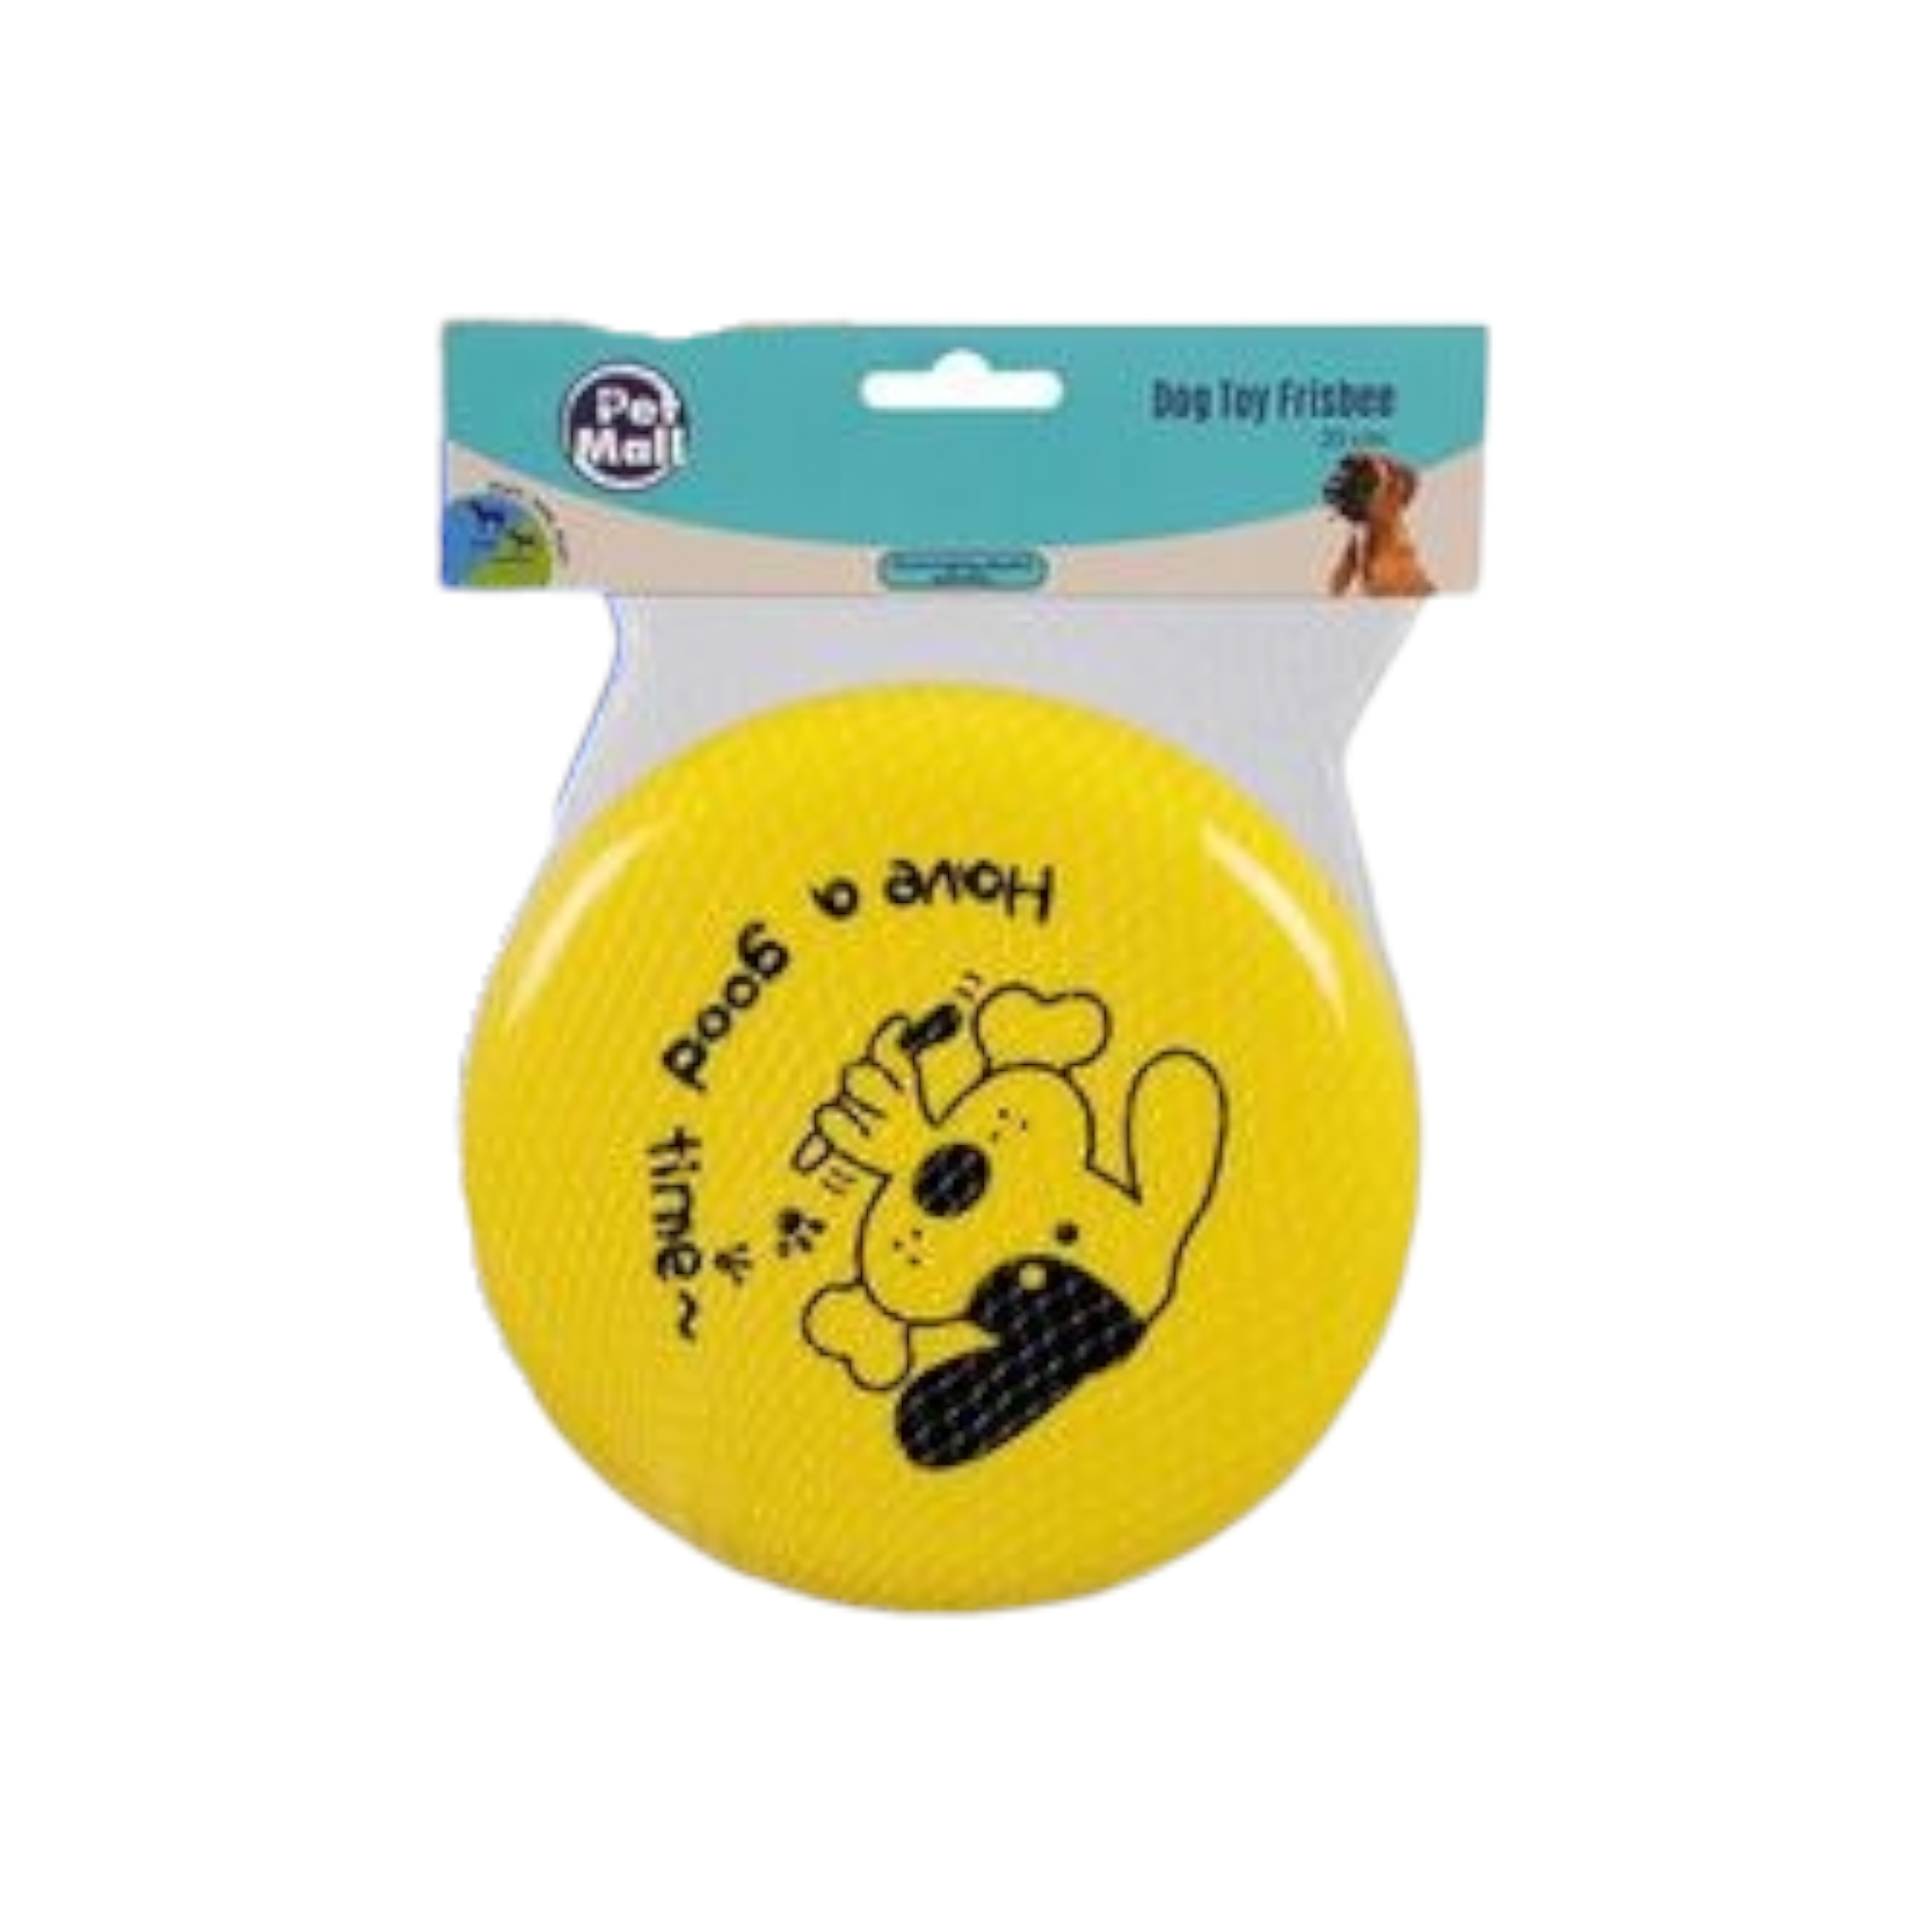 Pet Mall Dog Toy Frisbee 20cm each